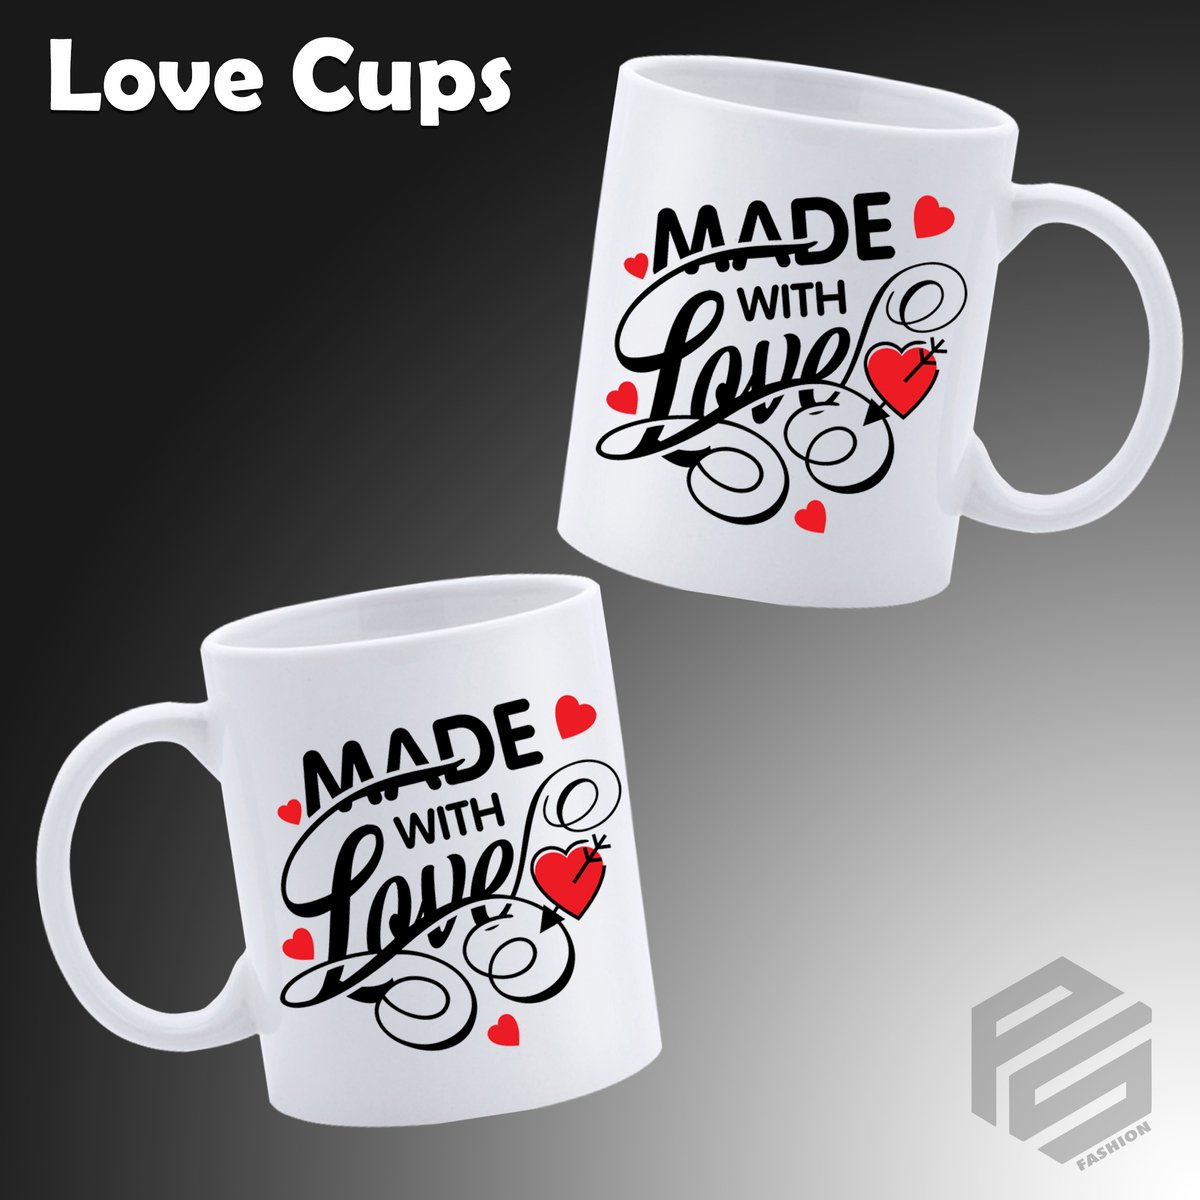 Made with Love Couple Matching mug - Mug with text - Funny mug - Anniversary gift - Gift for husband - Gift for wife - Gift for her - Gift for him - Funny gift - Tea glasses - Valentine gifts - Coffee cups